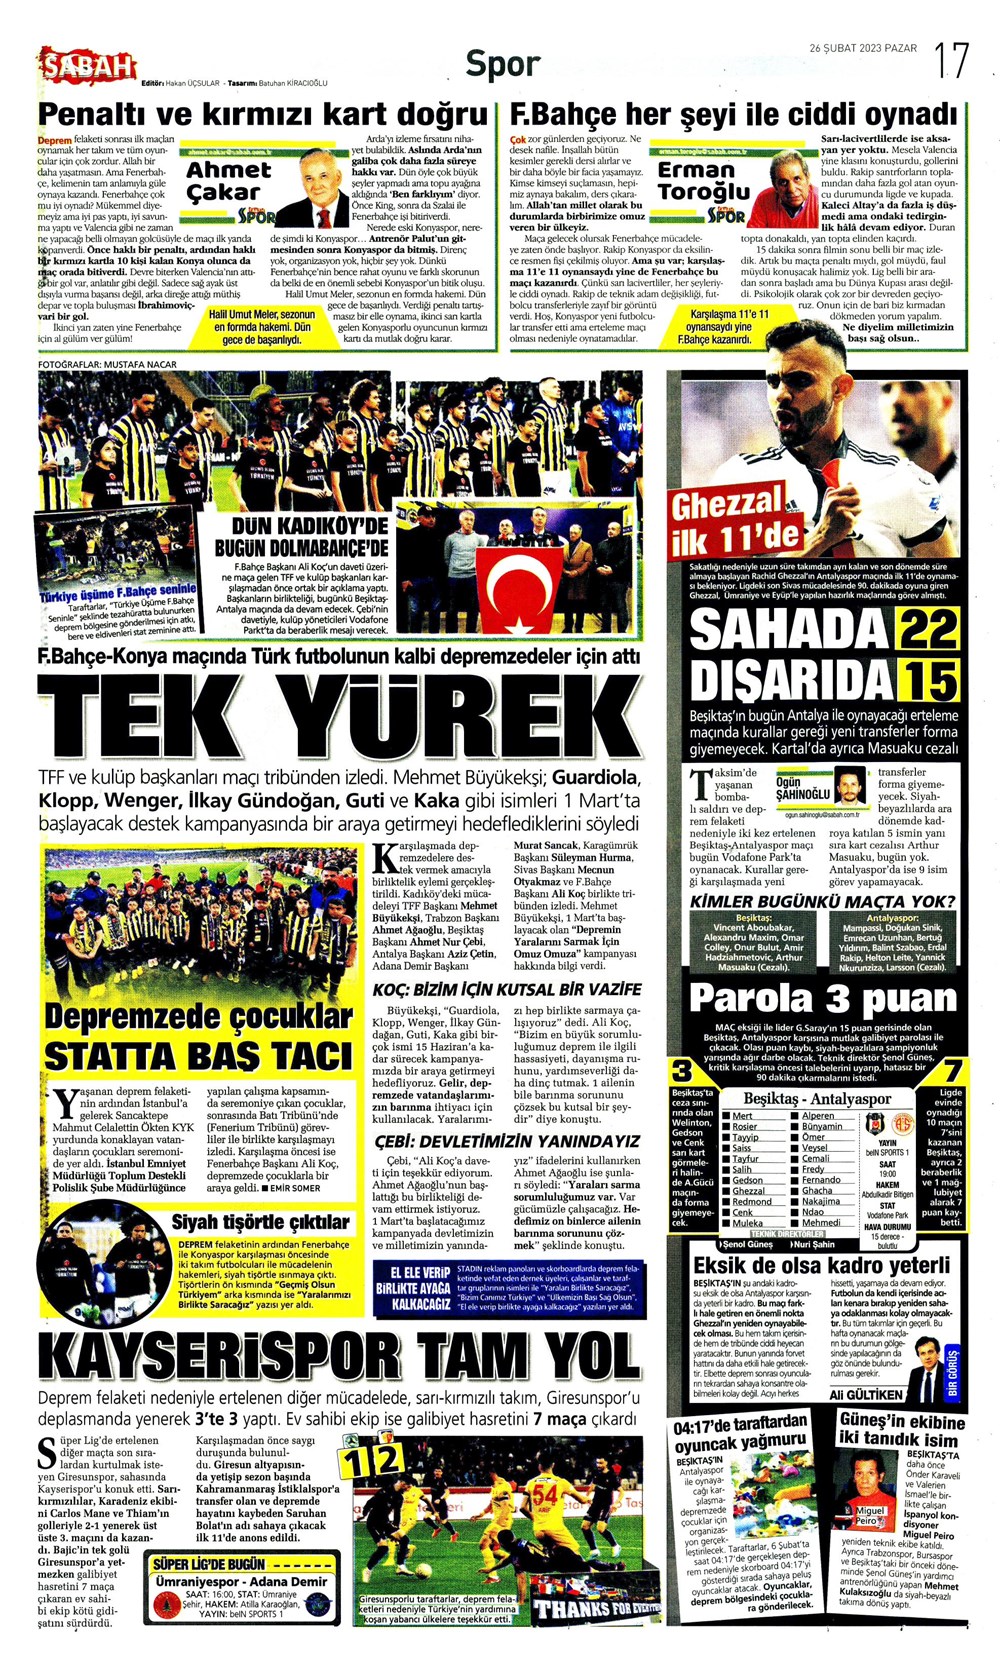 "Valenci'ağa' böyle istedi" - Sporun manşetleri  - 27. Foto